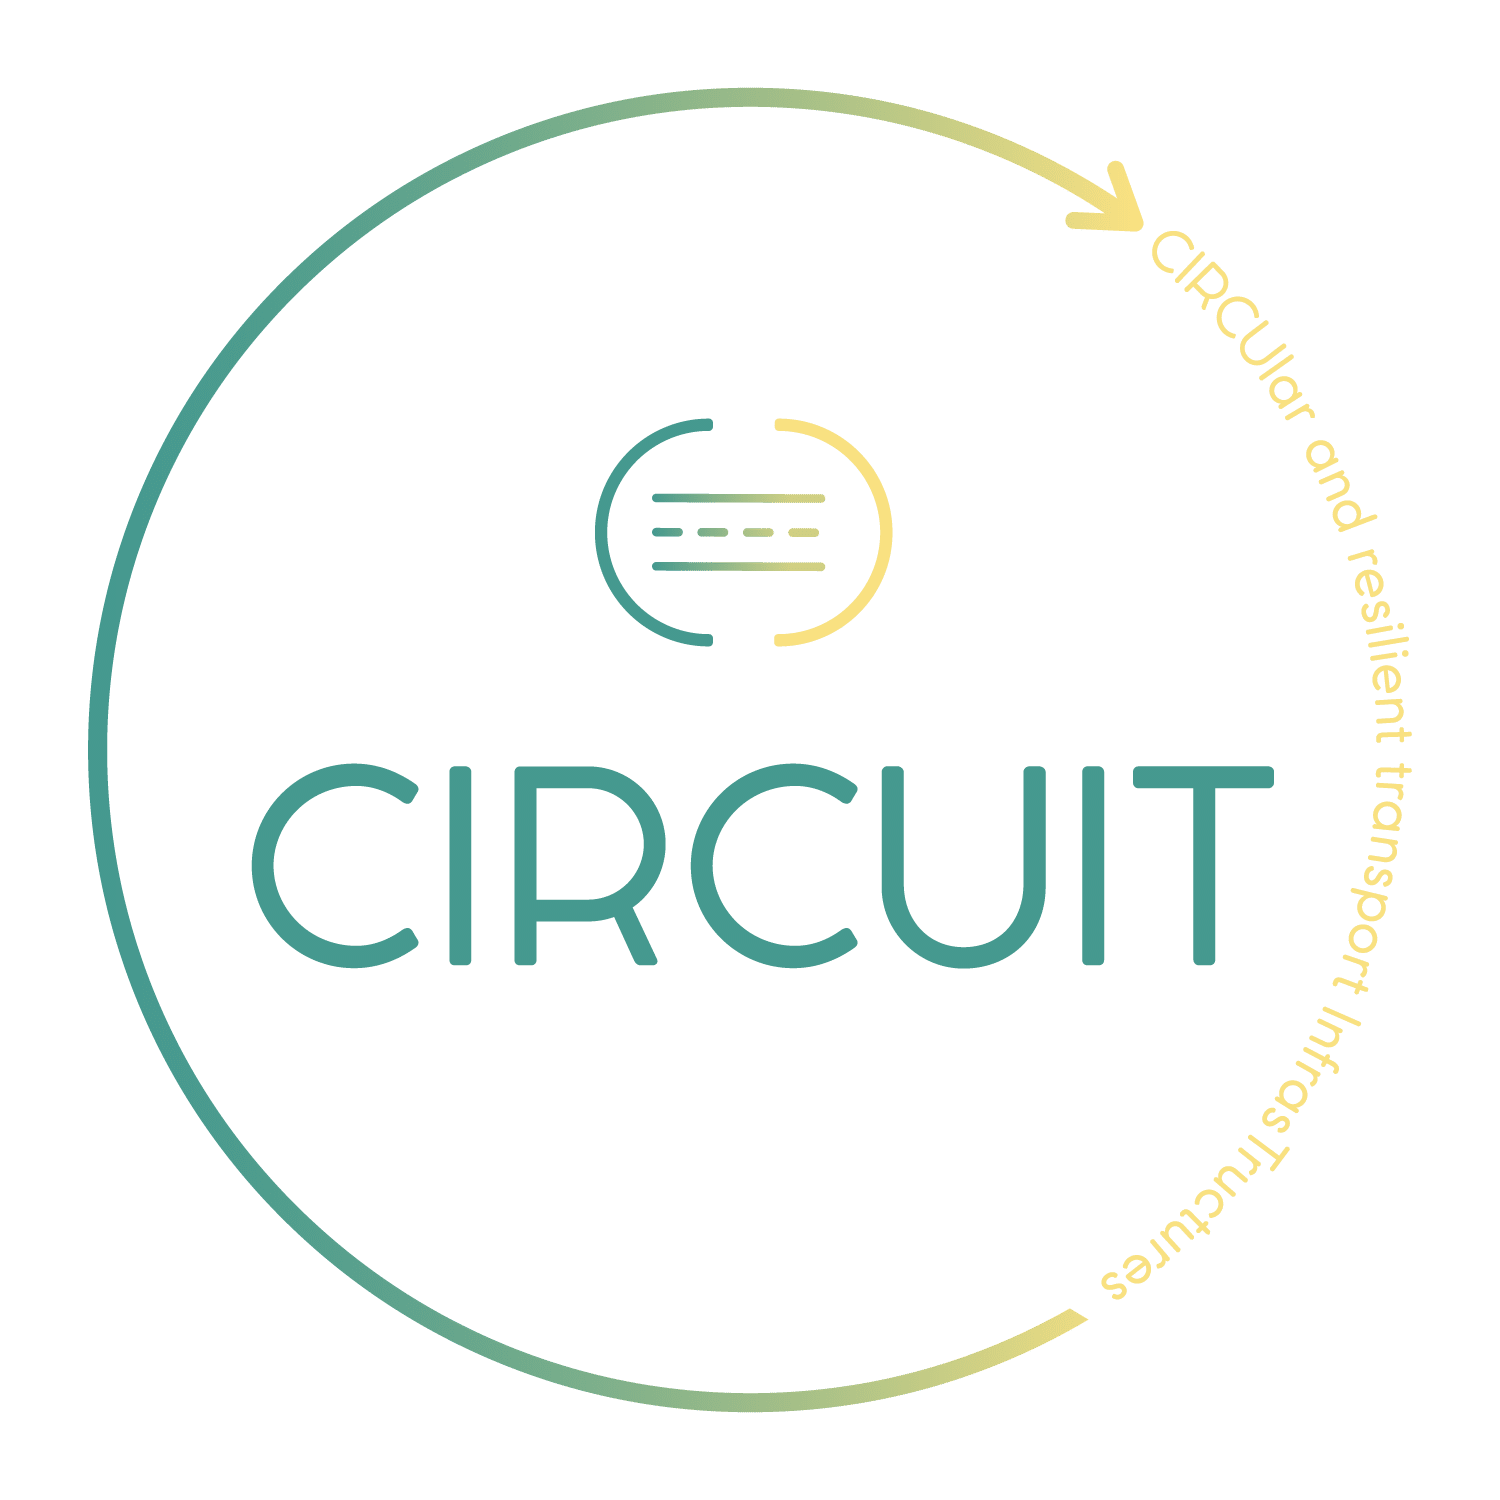 CIRCUIT project logo